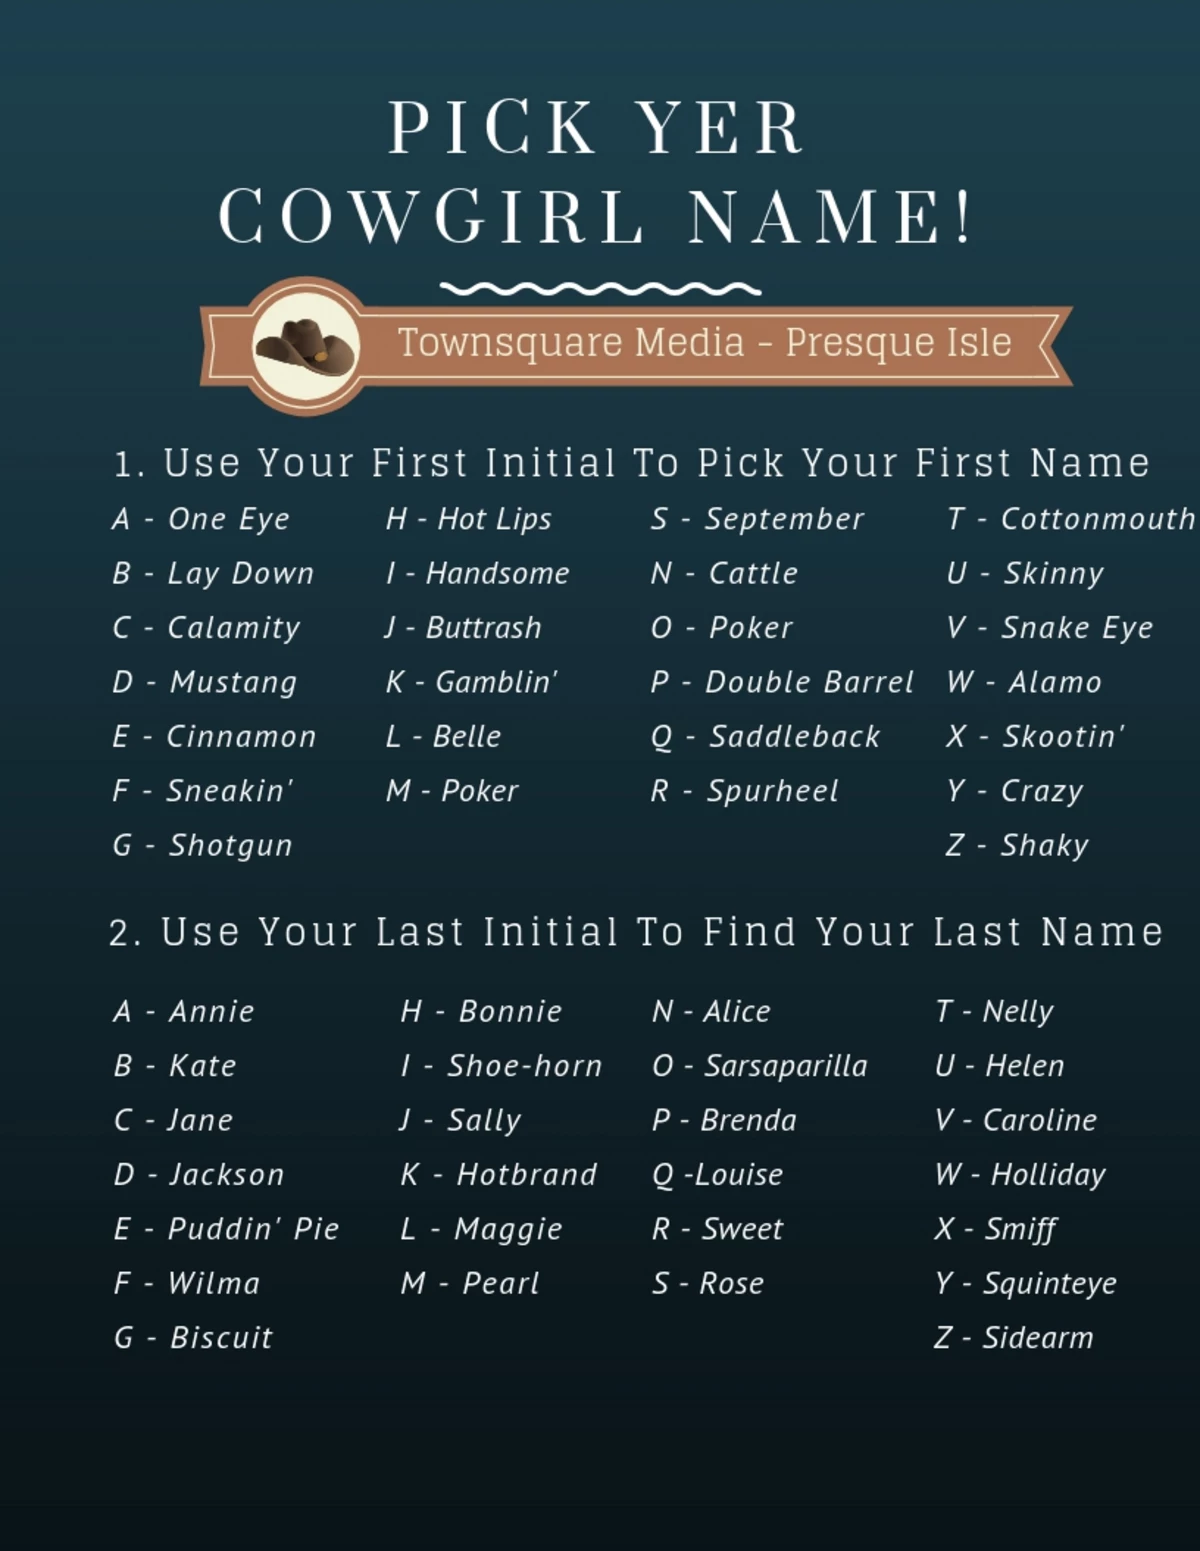 cowgirl nicknames generator